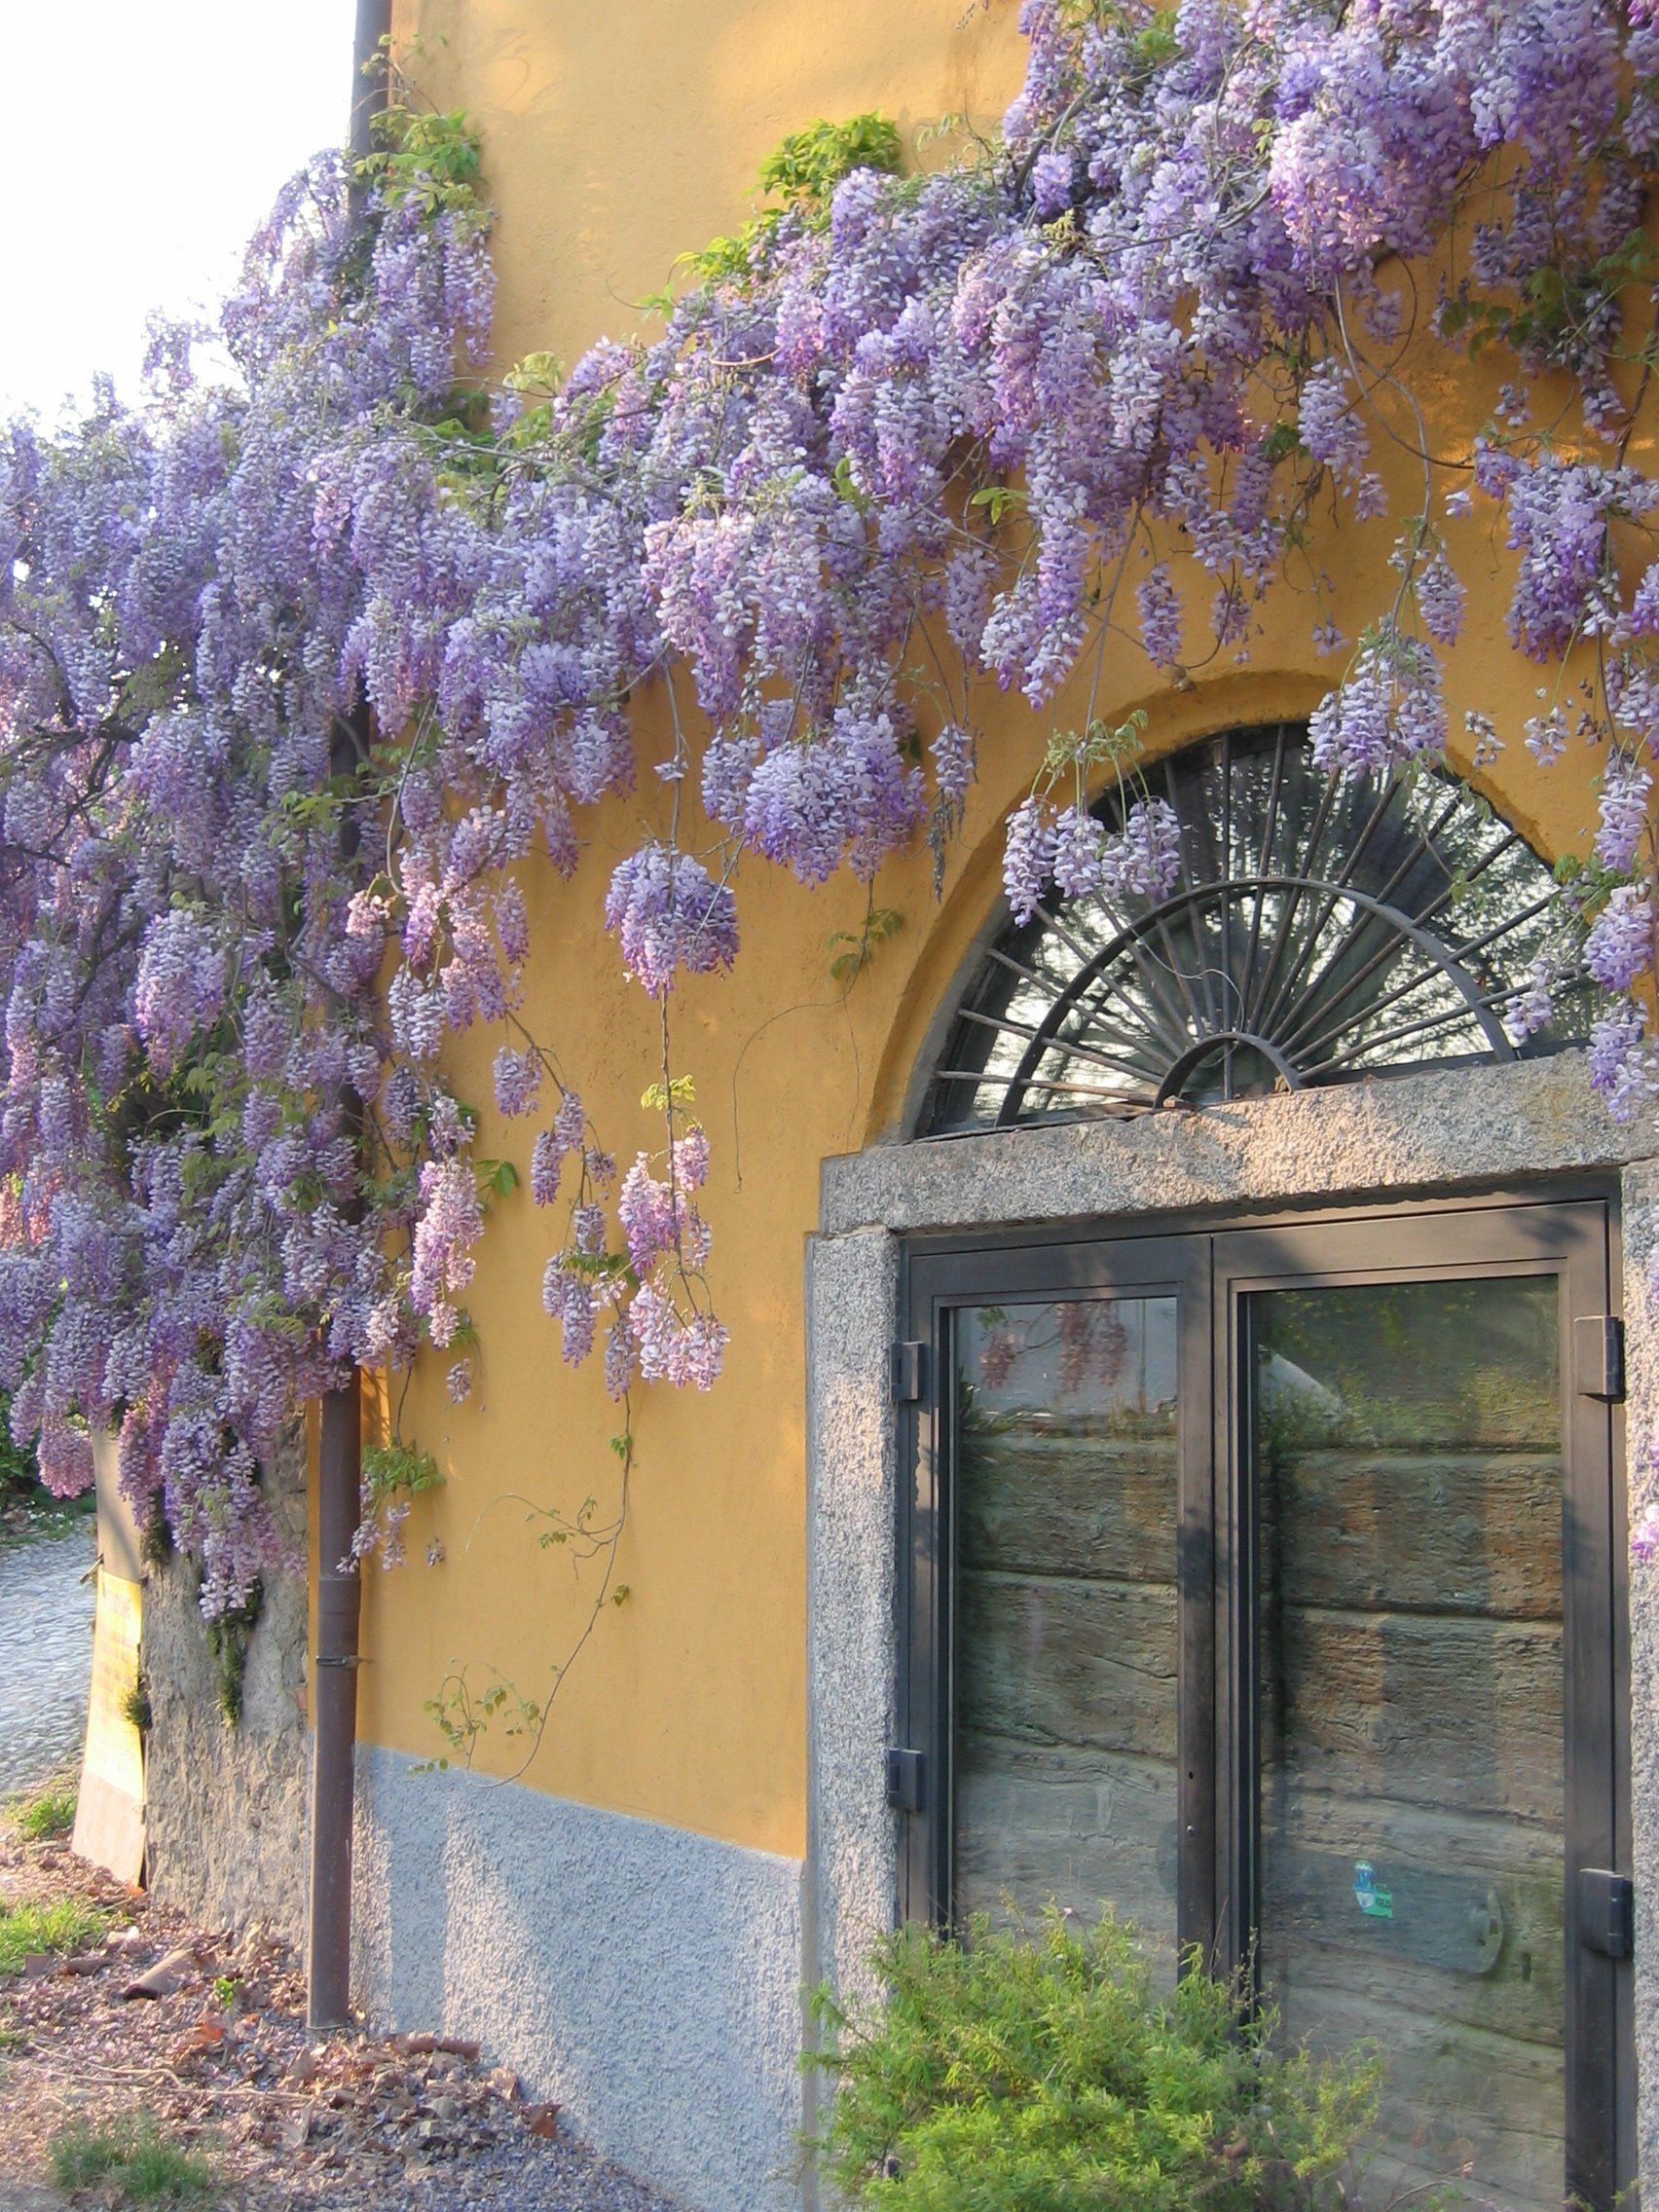 ingresso di una casa con sopra una pianta viola